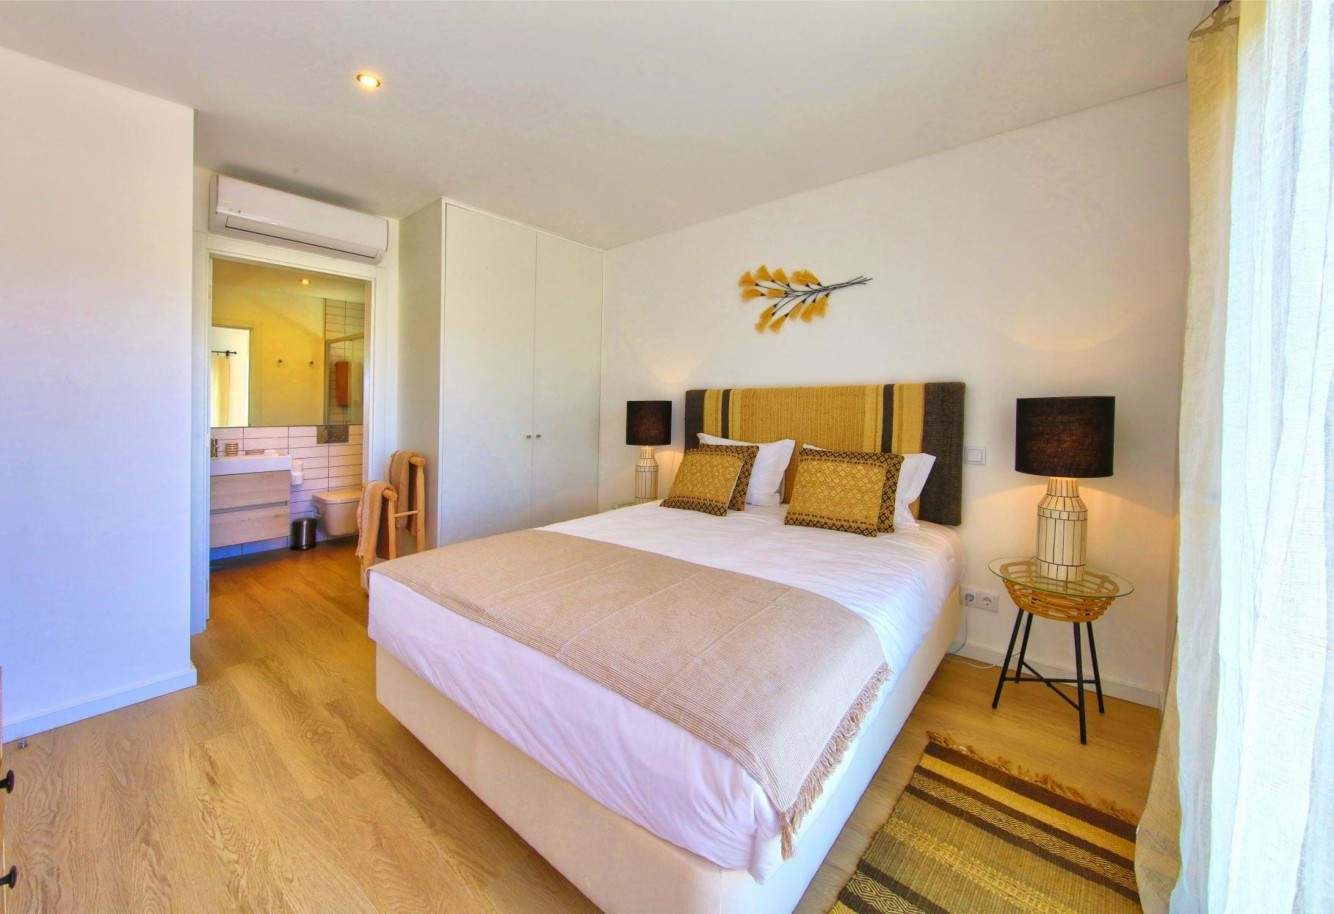 2+1 bedroom villa in resort, for sale in Carvoeiro, Algarve_206841